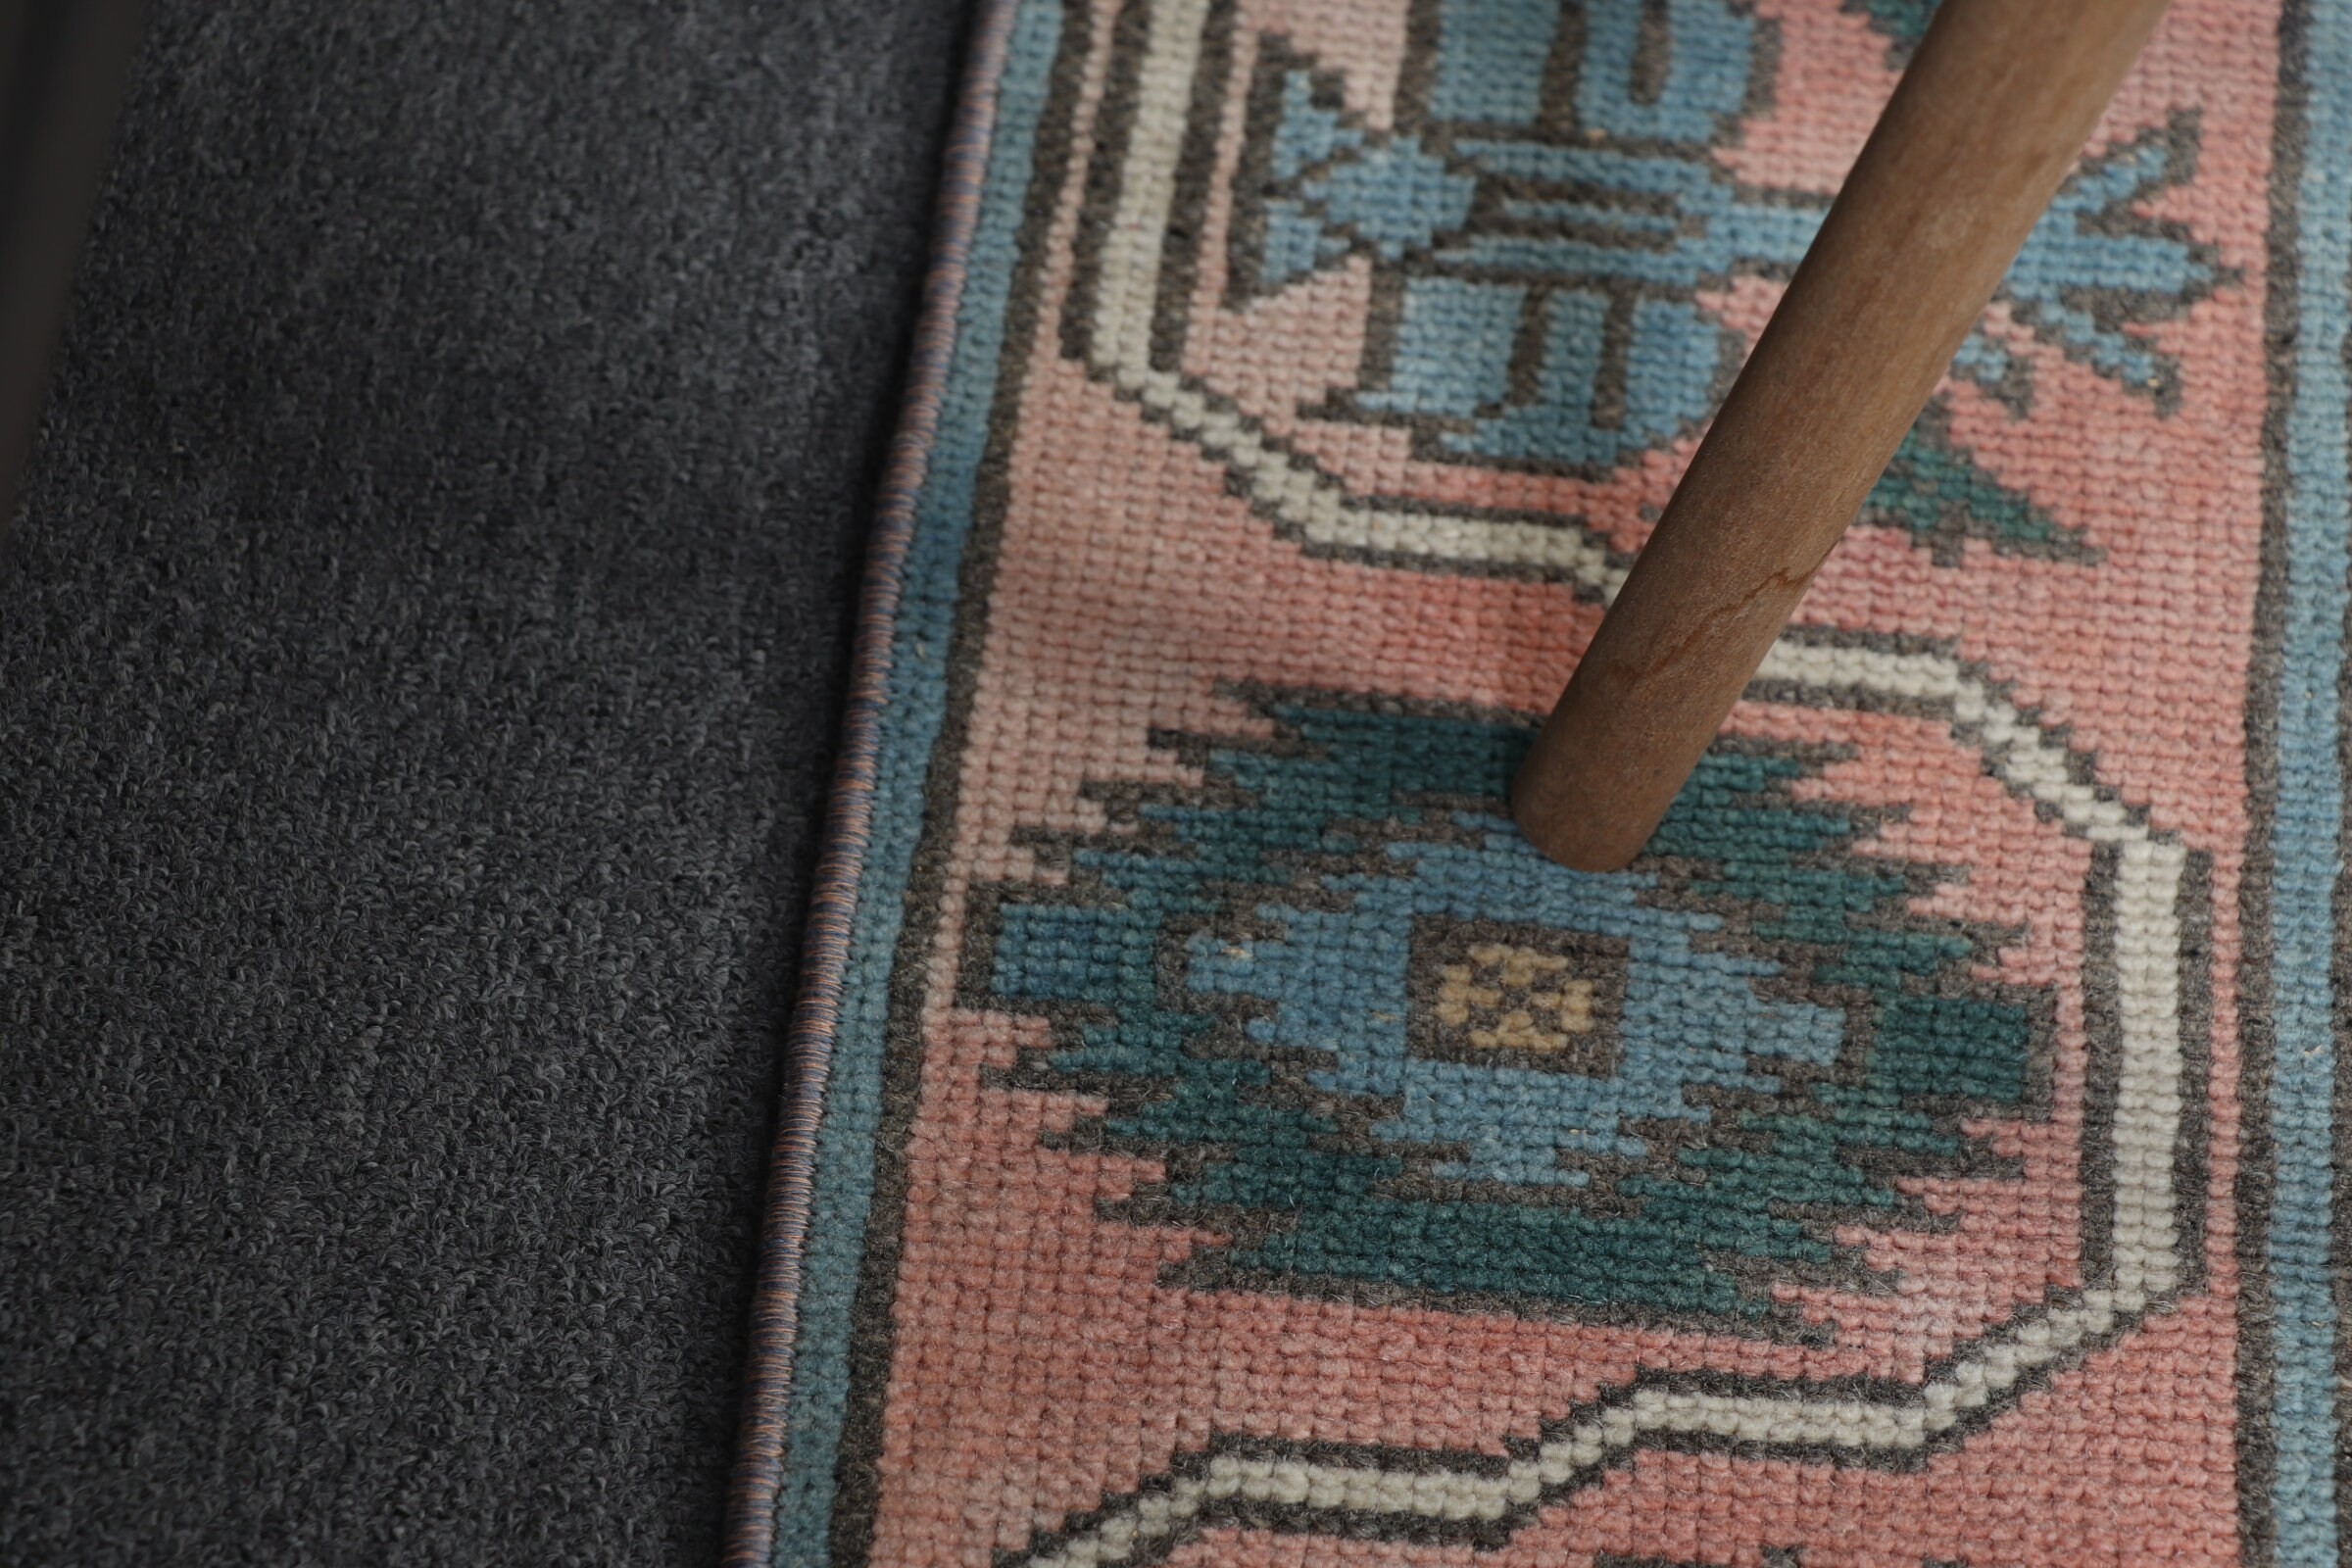 Turkish Rug, Organic Rug, Oriental Rug, Home Decor Rugs, Vintage Rugs, Kitchen Rugs, Pink  5.1x7.6 ft Area Rugs, Indoor Rugs